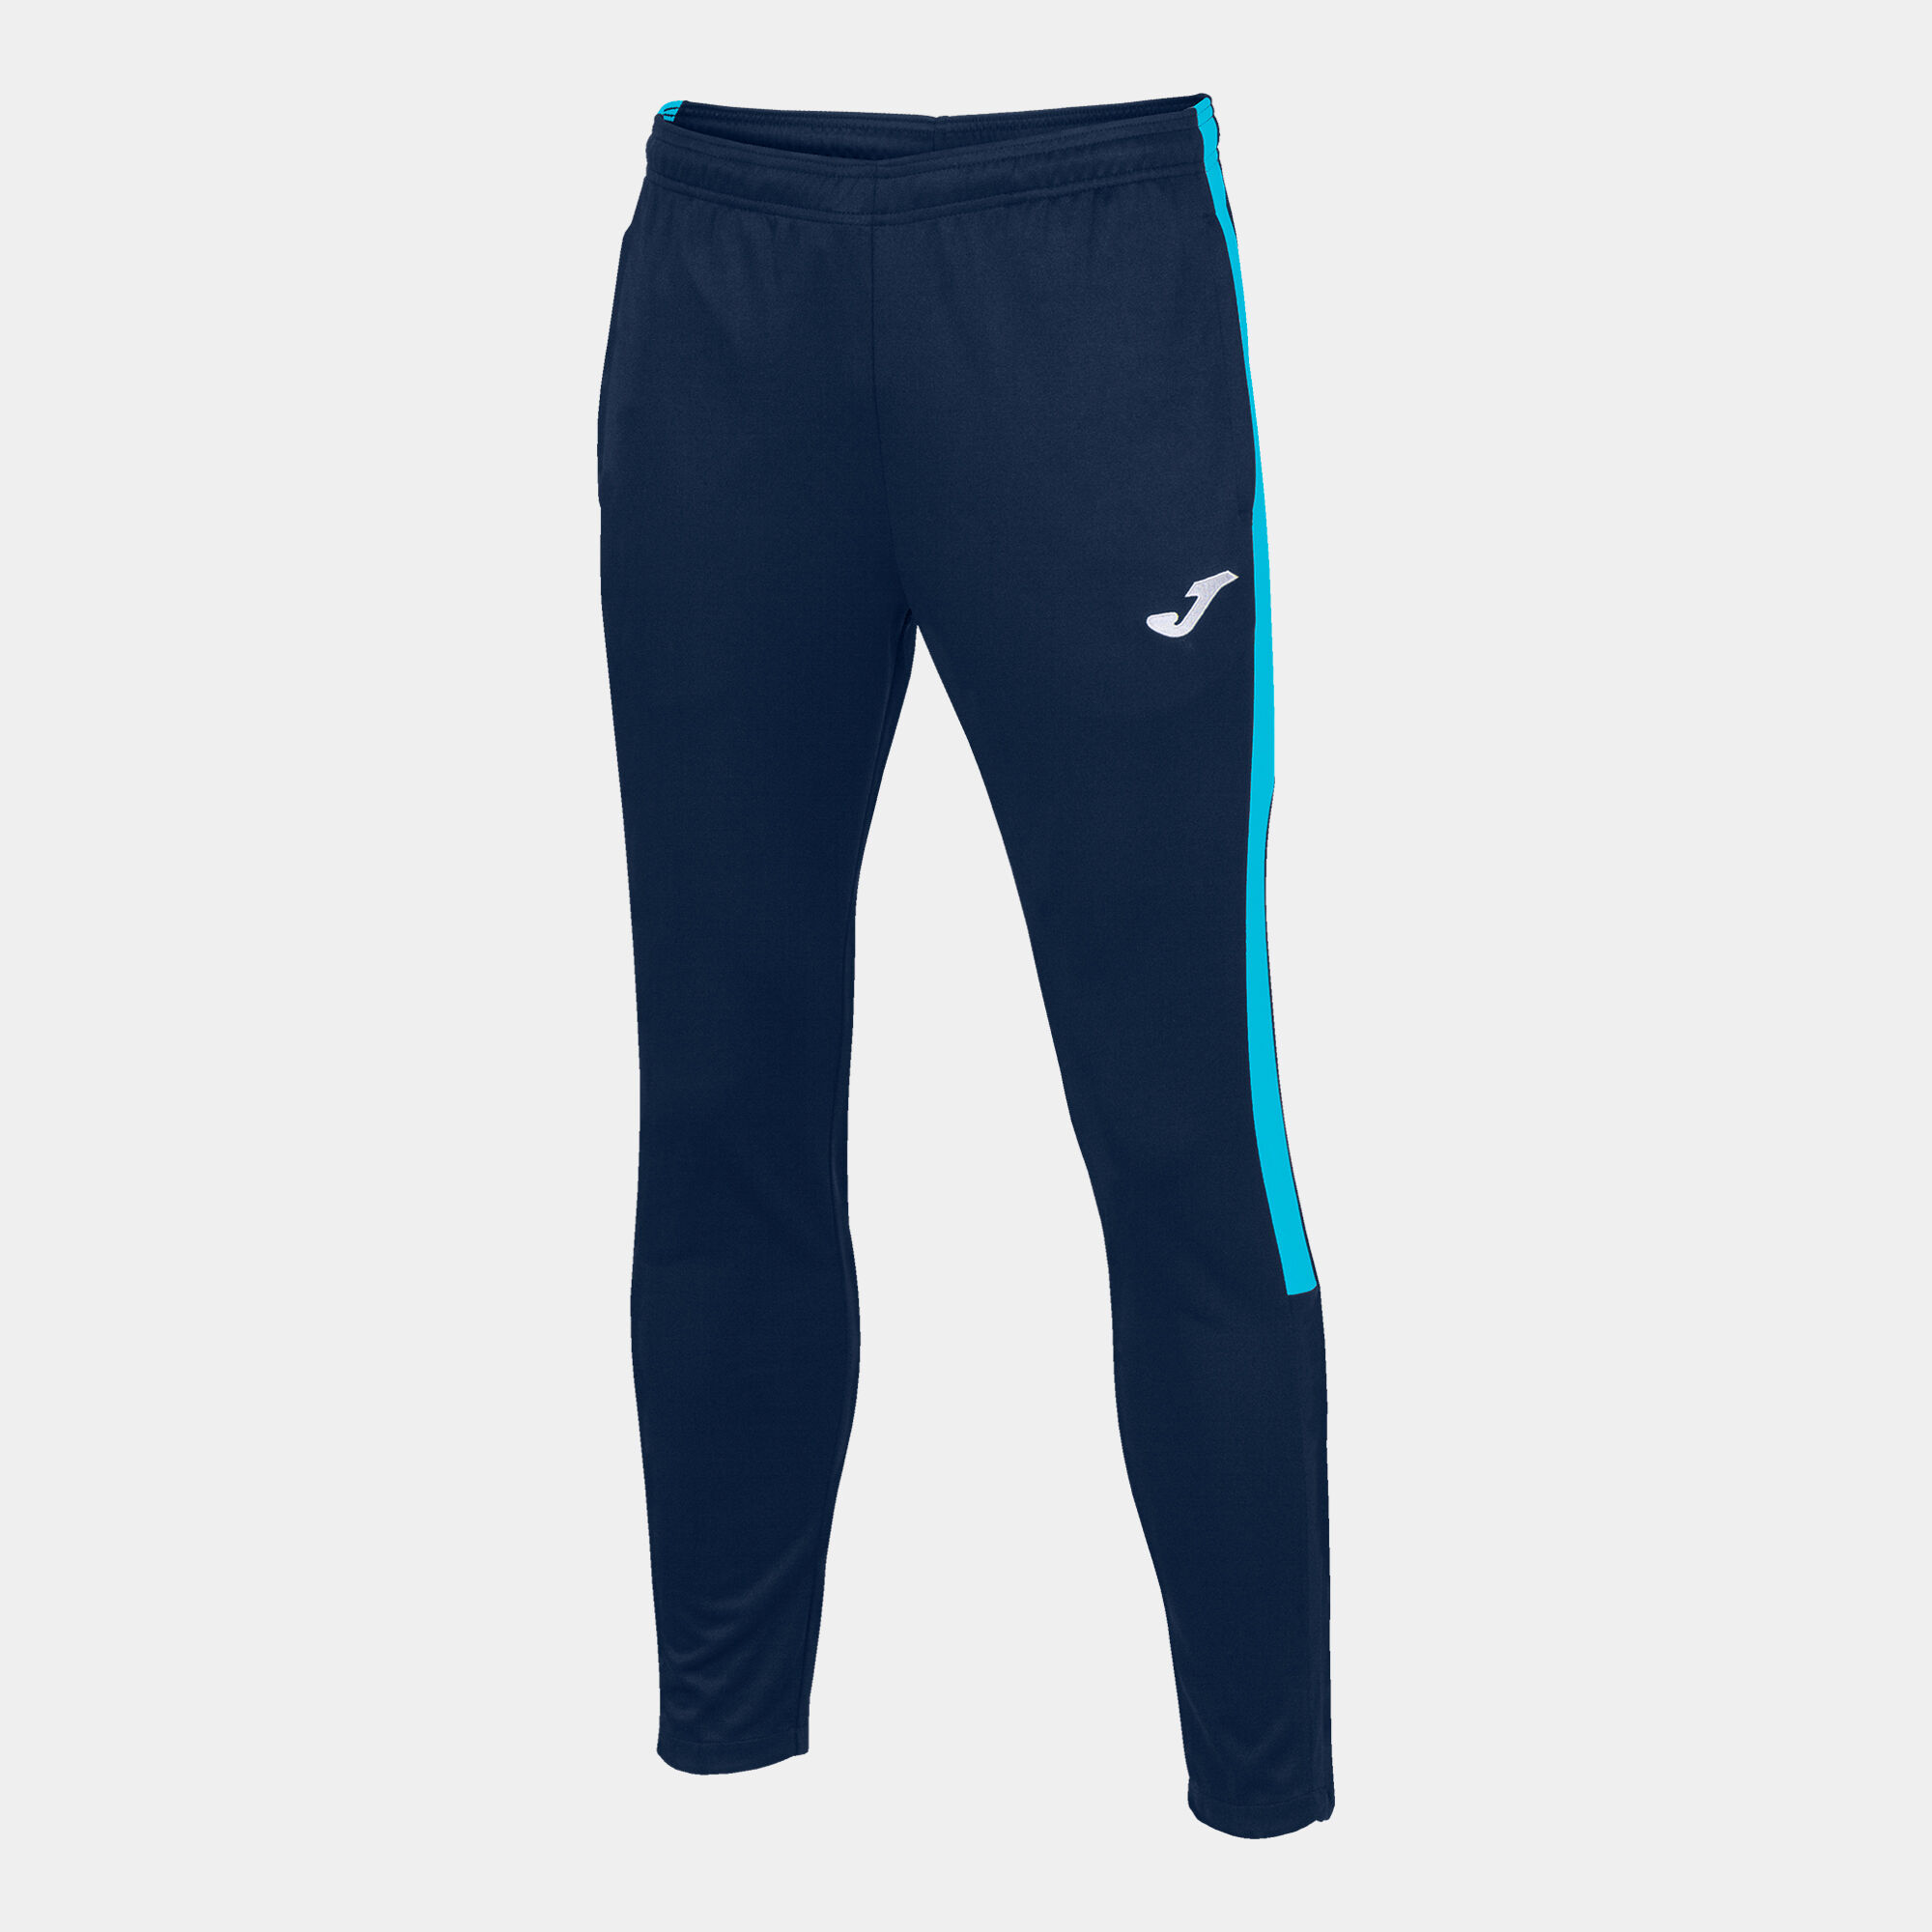 Pantalone lungo uomo Eco Championship blu navy turchese fluorescente